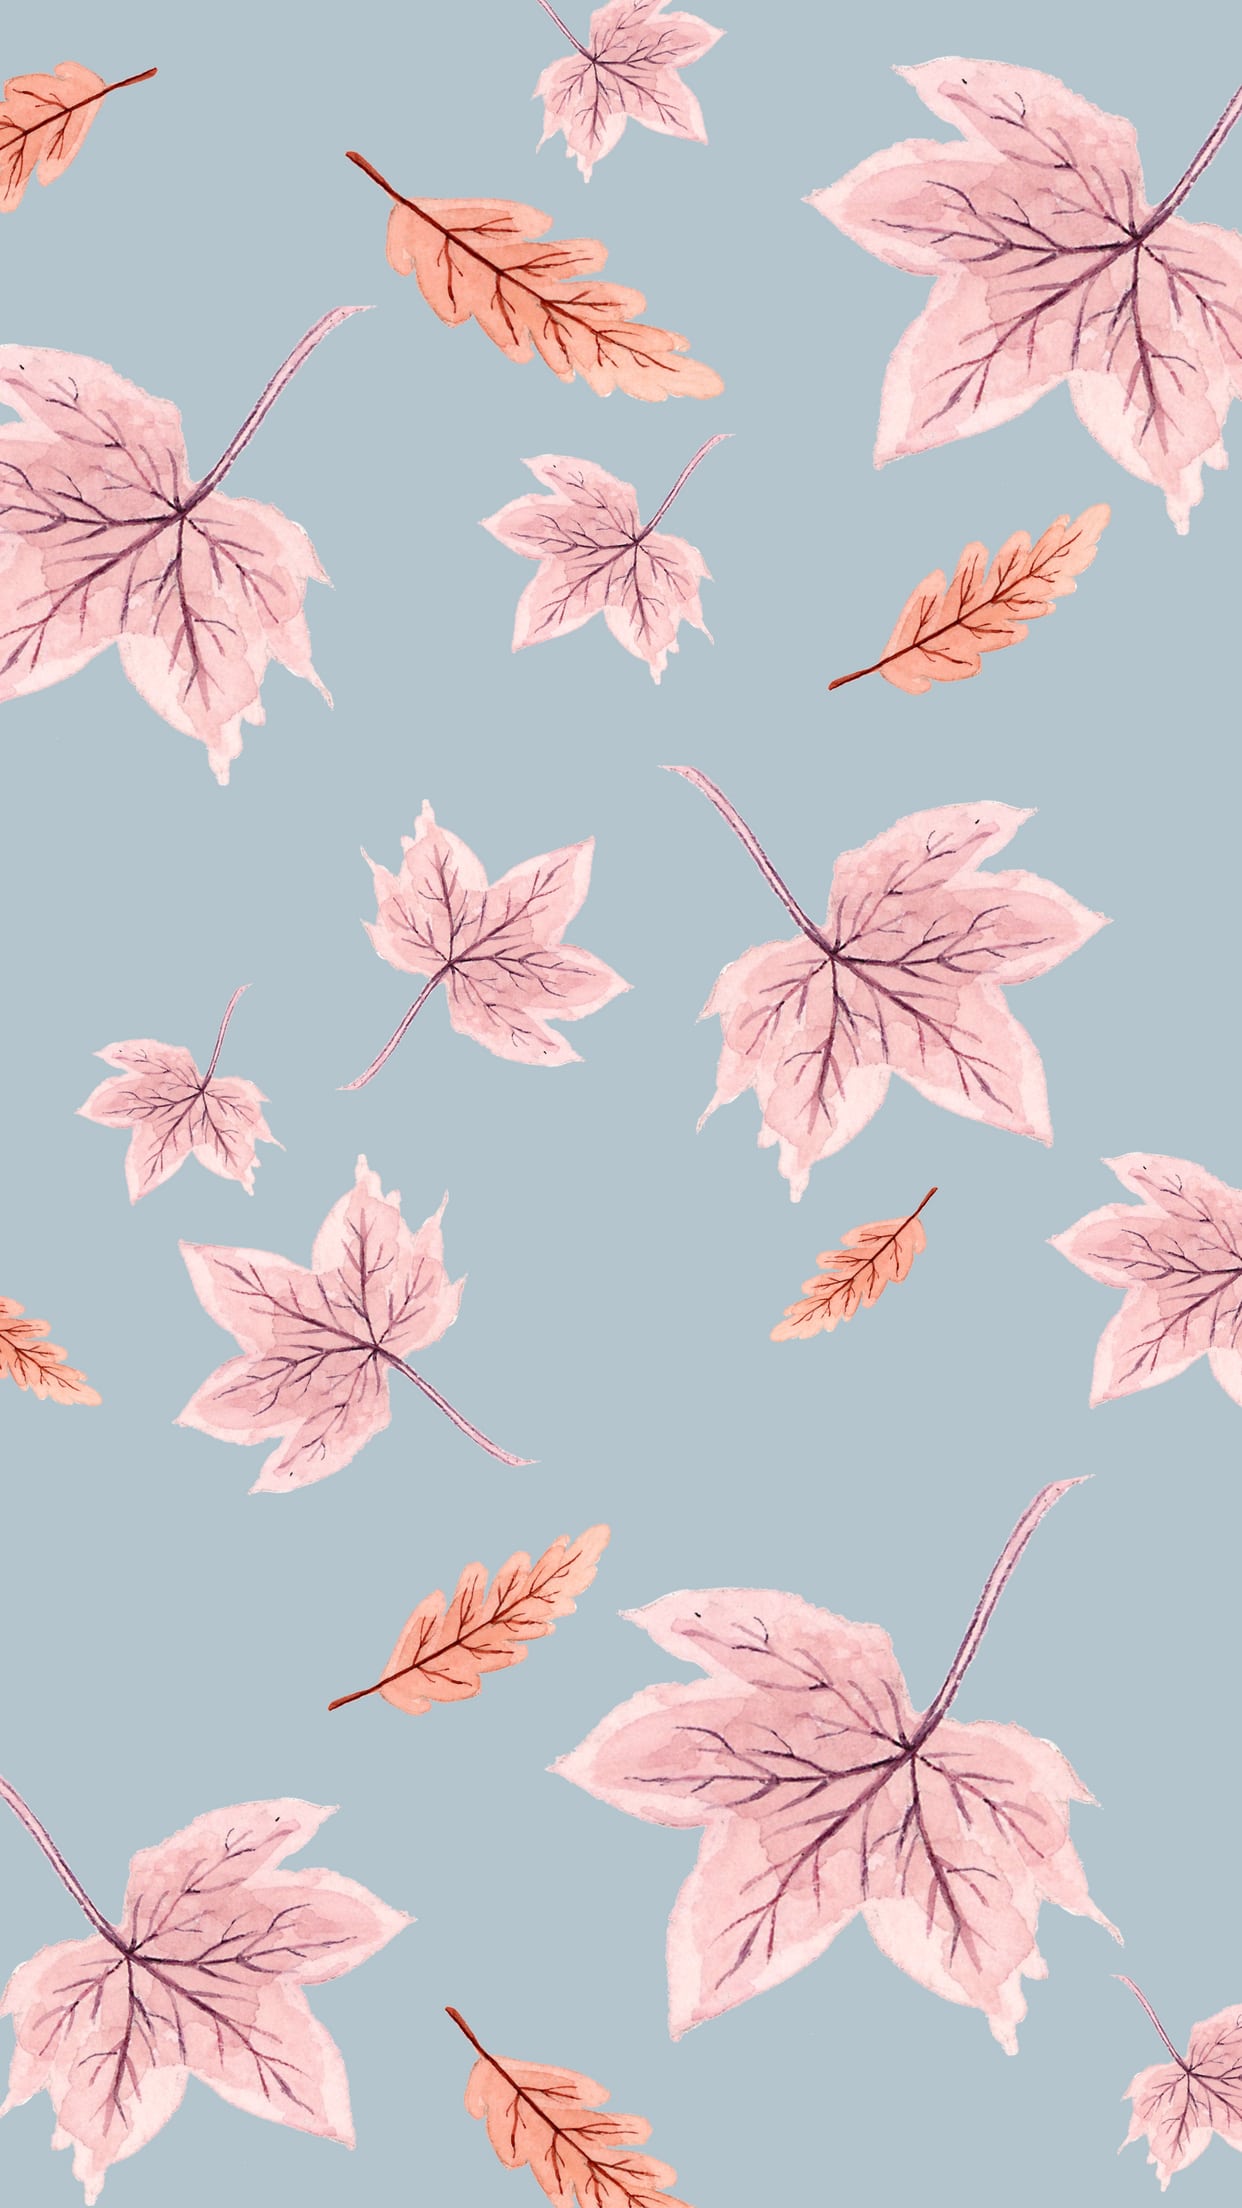 Cute Fall Wallpaper - NawPic